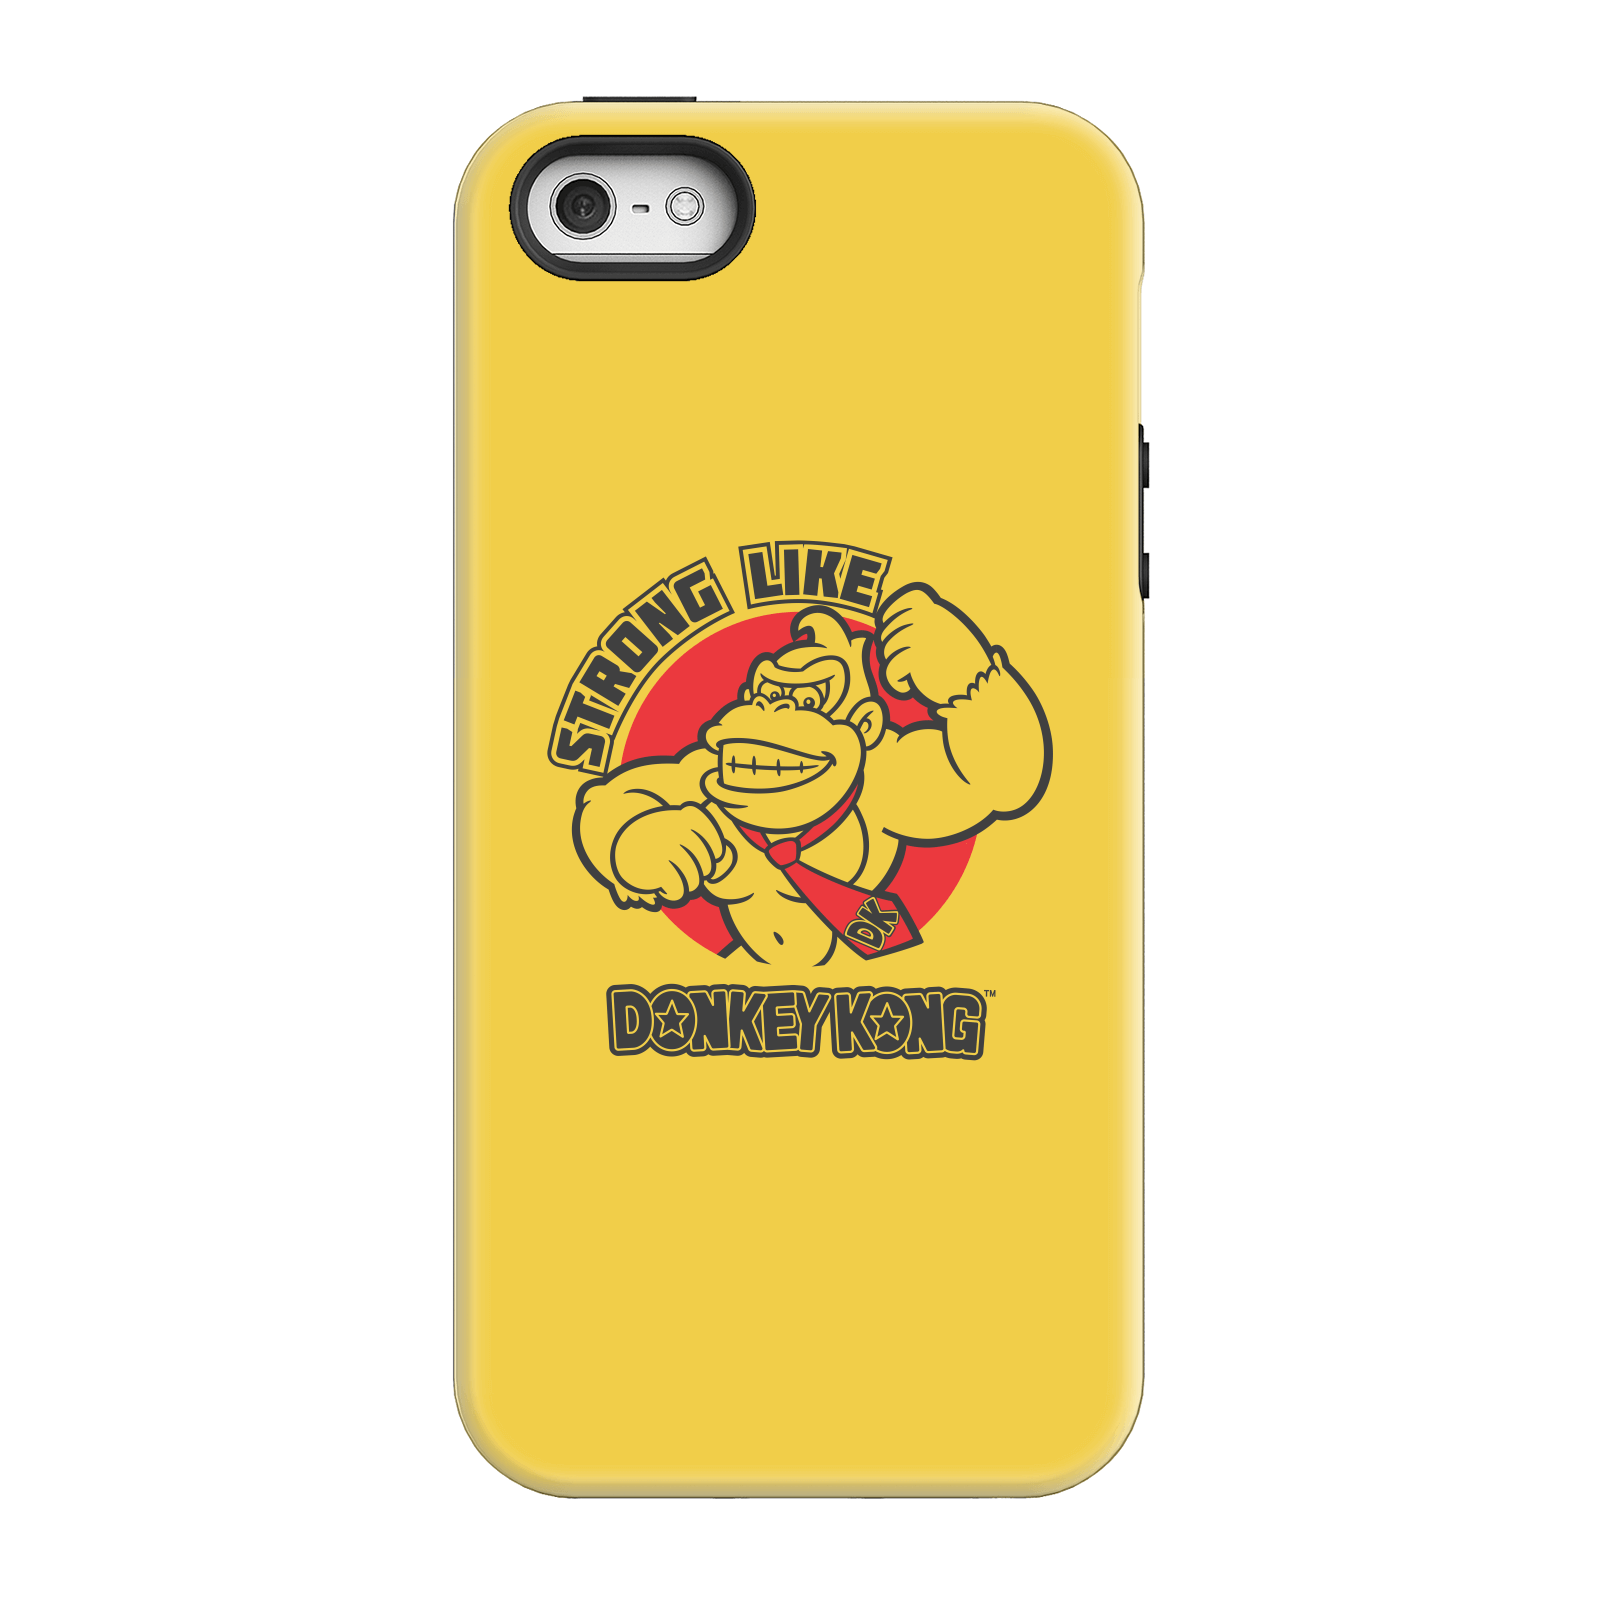 Nintendo Donkey Kong Strong Like Donkey Kong Phone Case - iPhone 5/5s - Tough Case - Matte